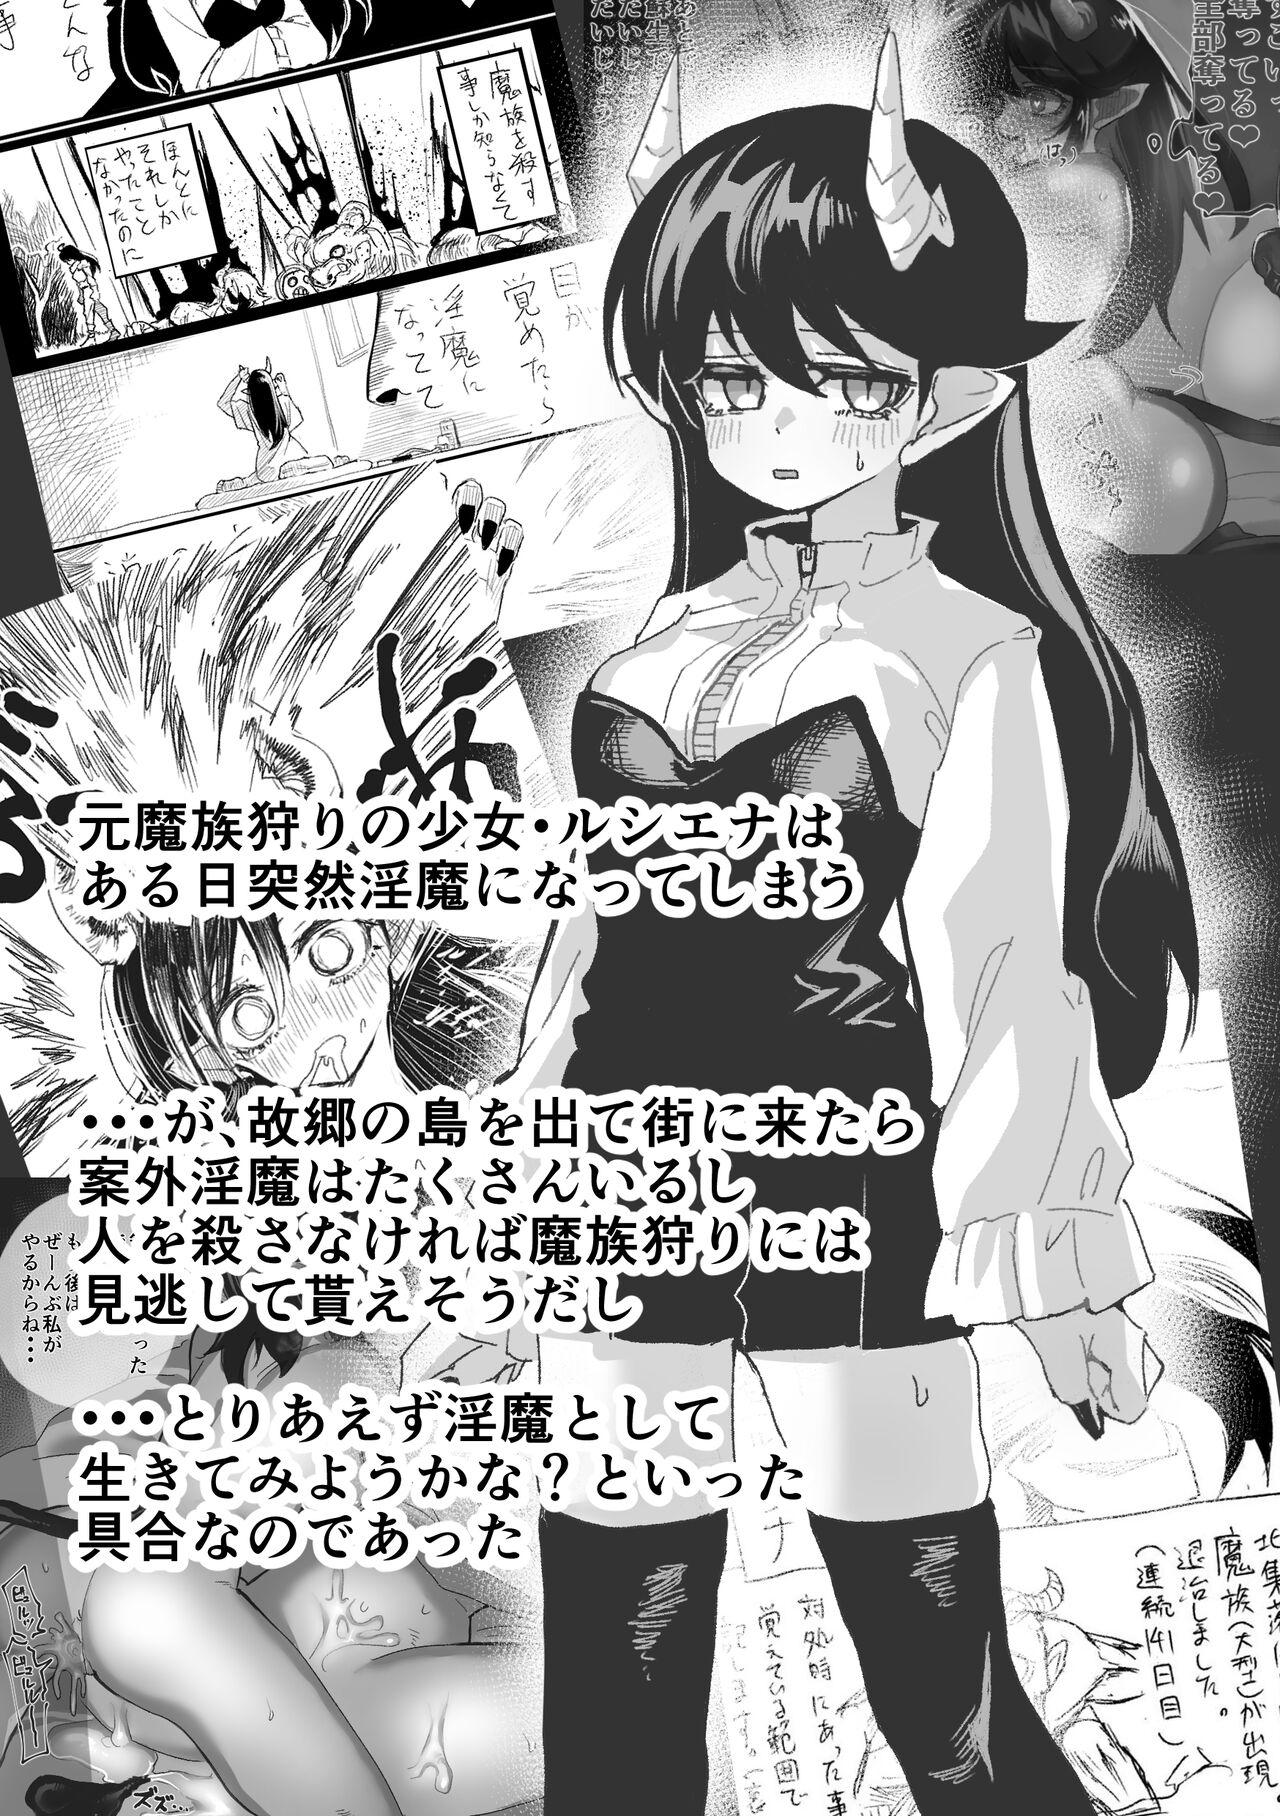 Insane Porn Inma no Iru Sekai - Original Mujer - Page 2